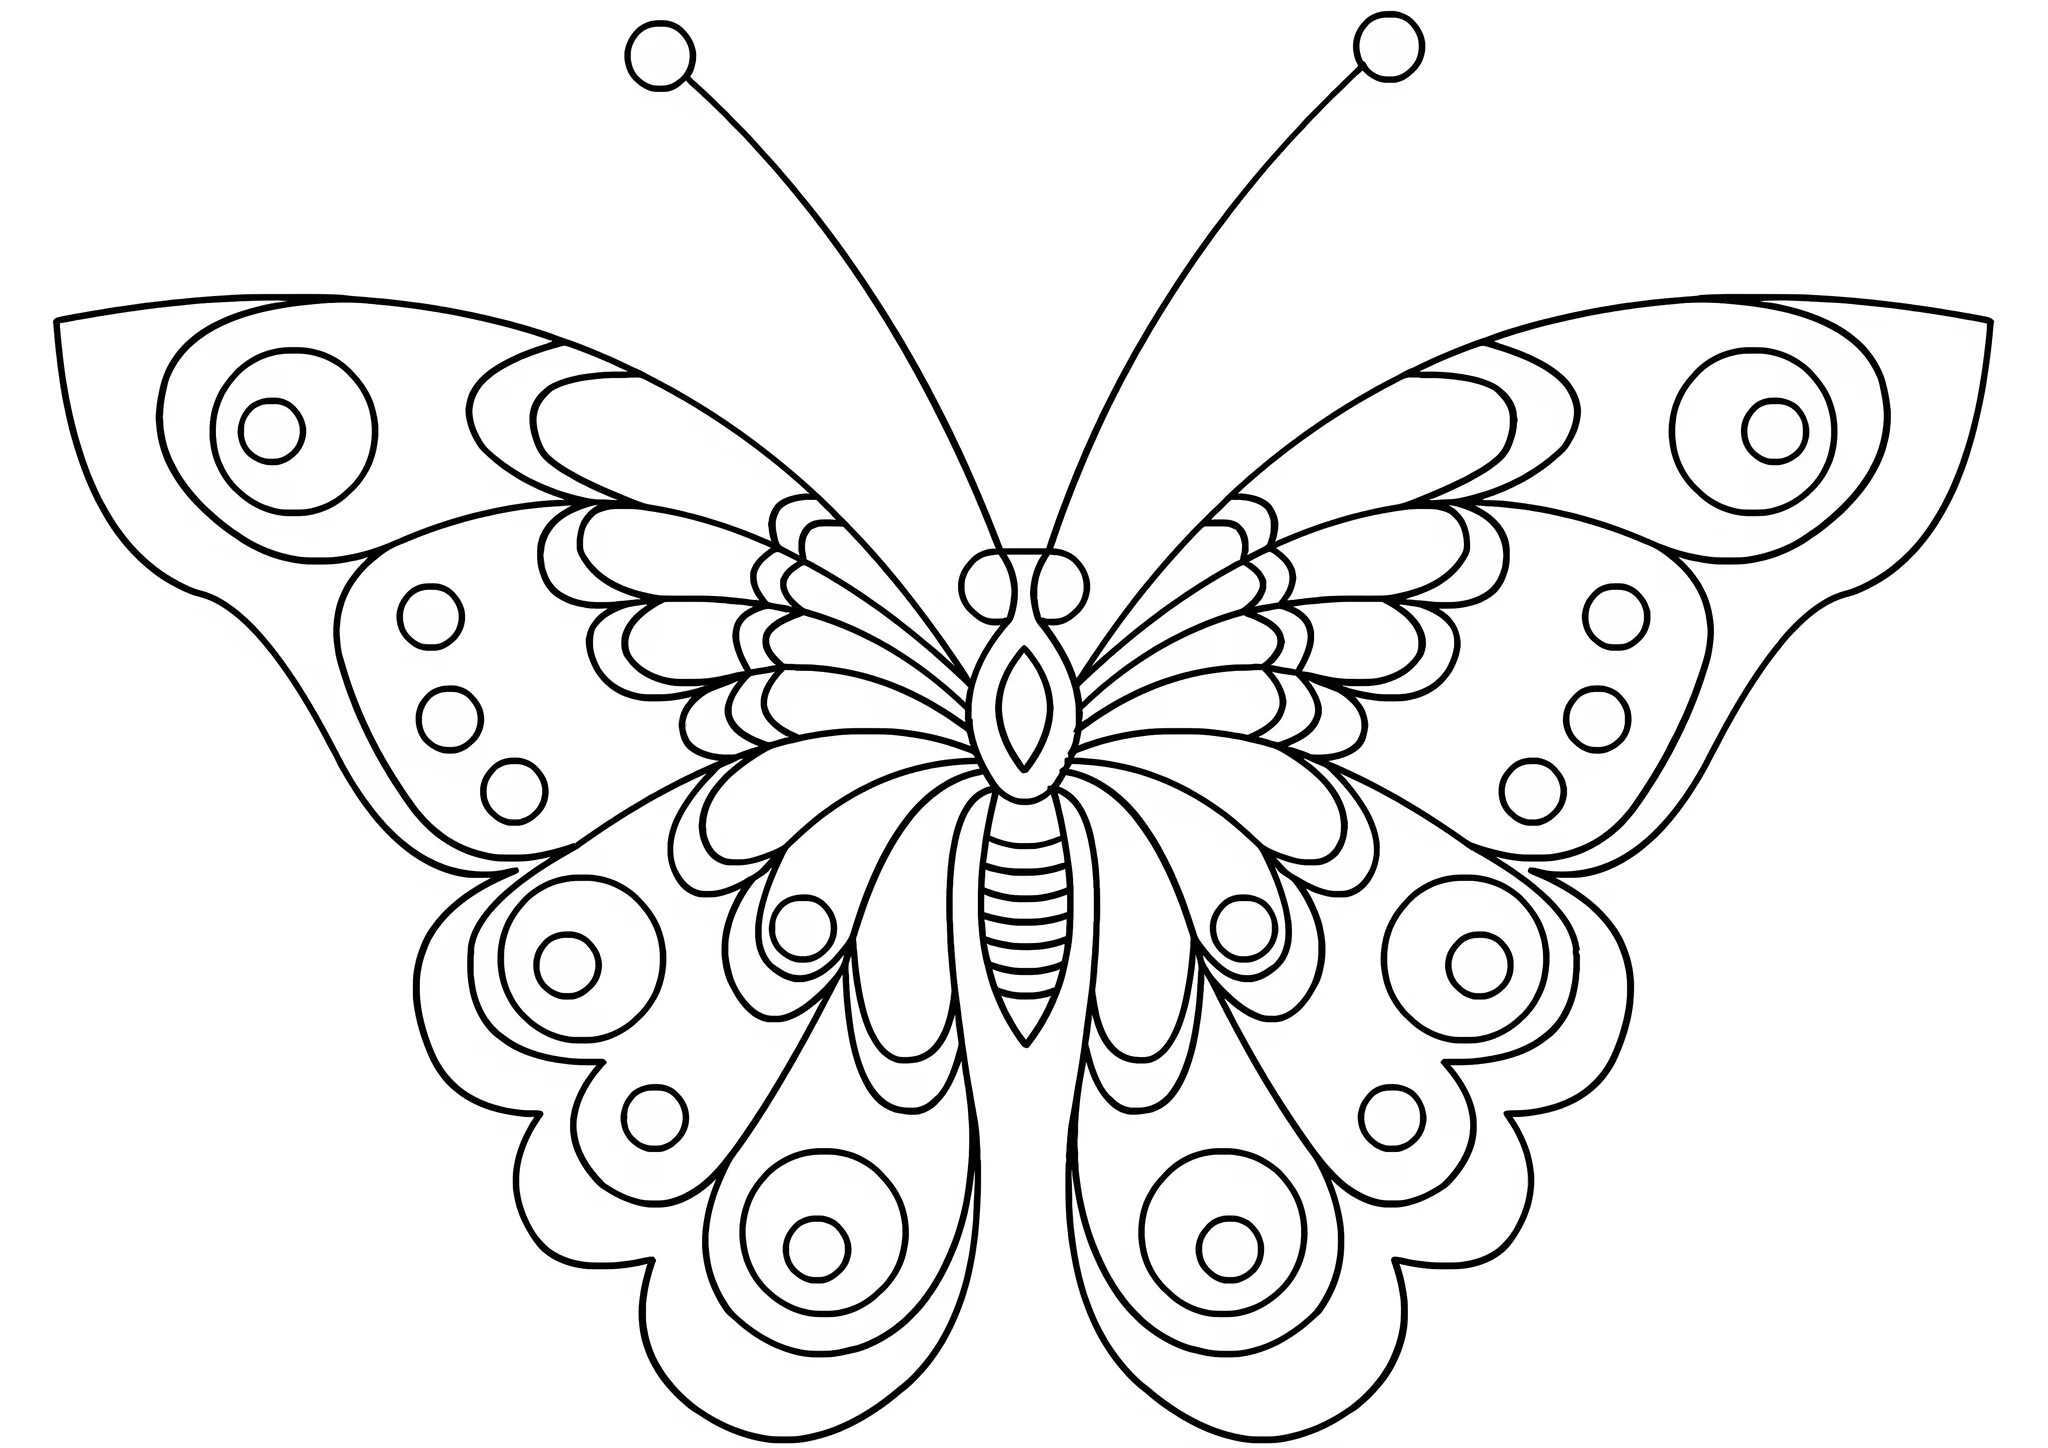 Трафареты для раскрашивания. Раскраска "бабочки". Бабочка рисунок. Шаблоны бабочек для раскрашивания детям. Бабочка раскраска шаблон.